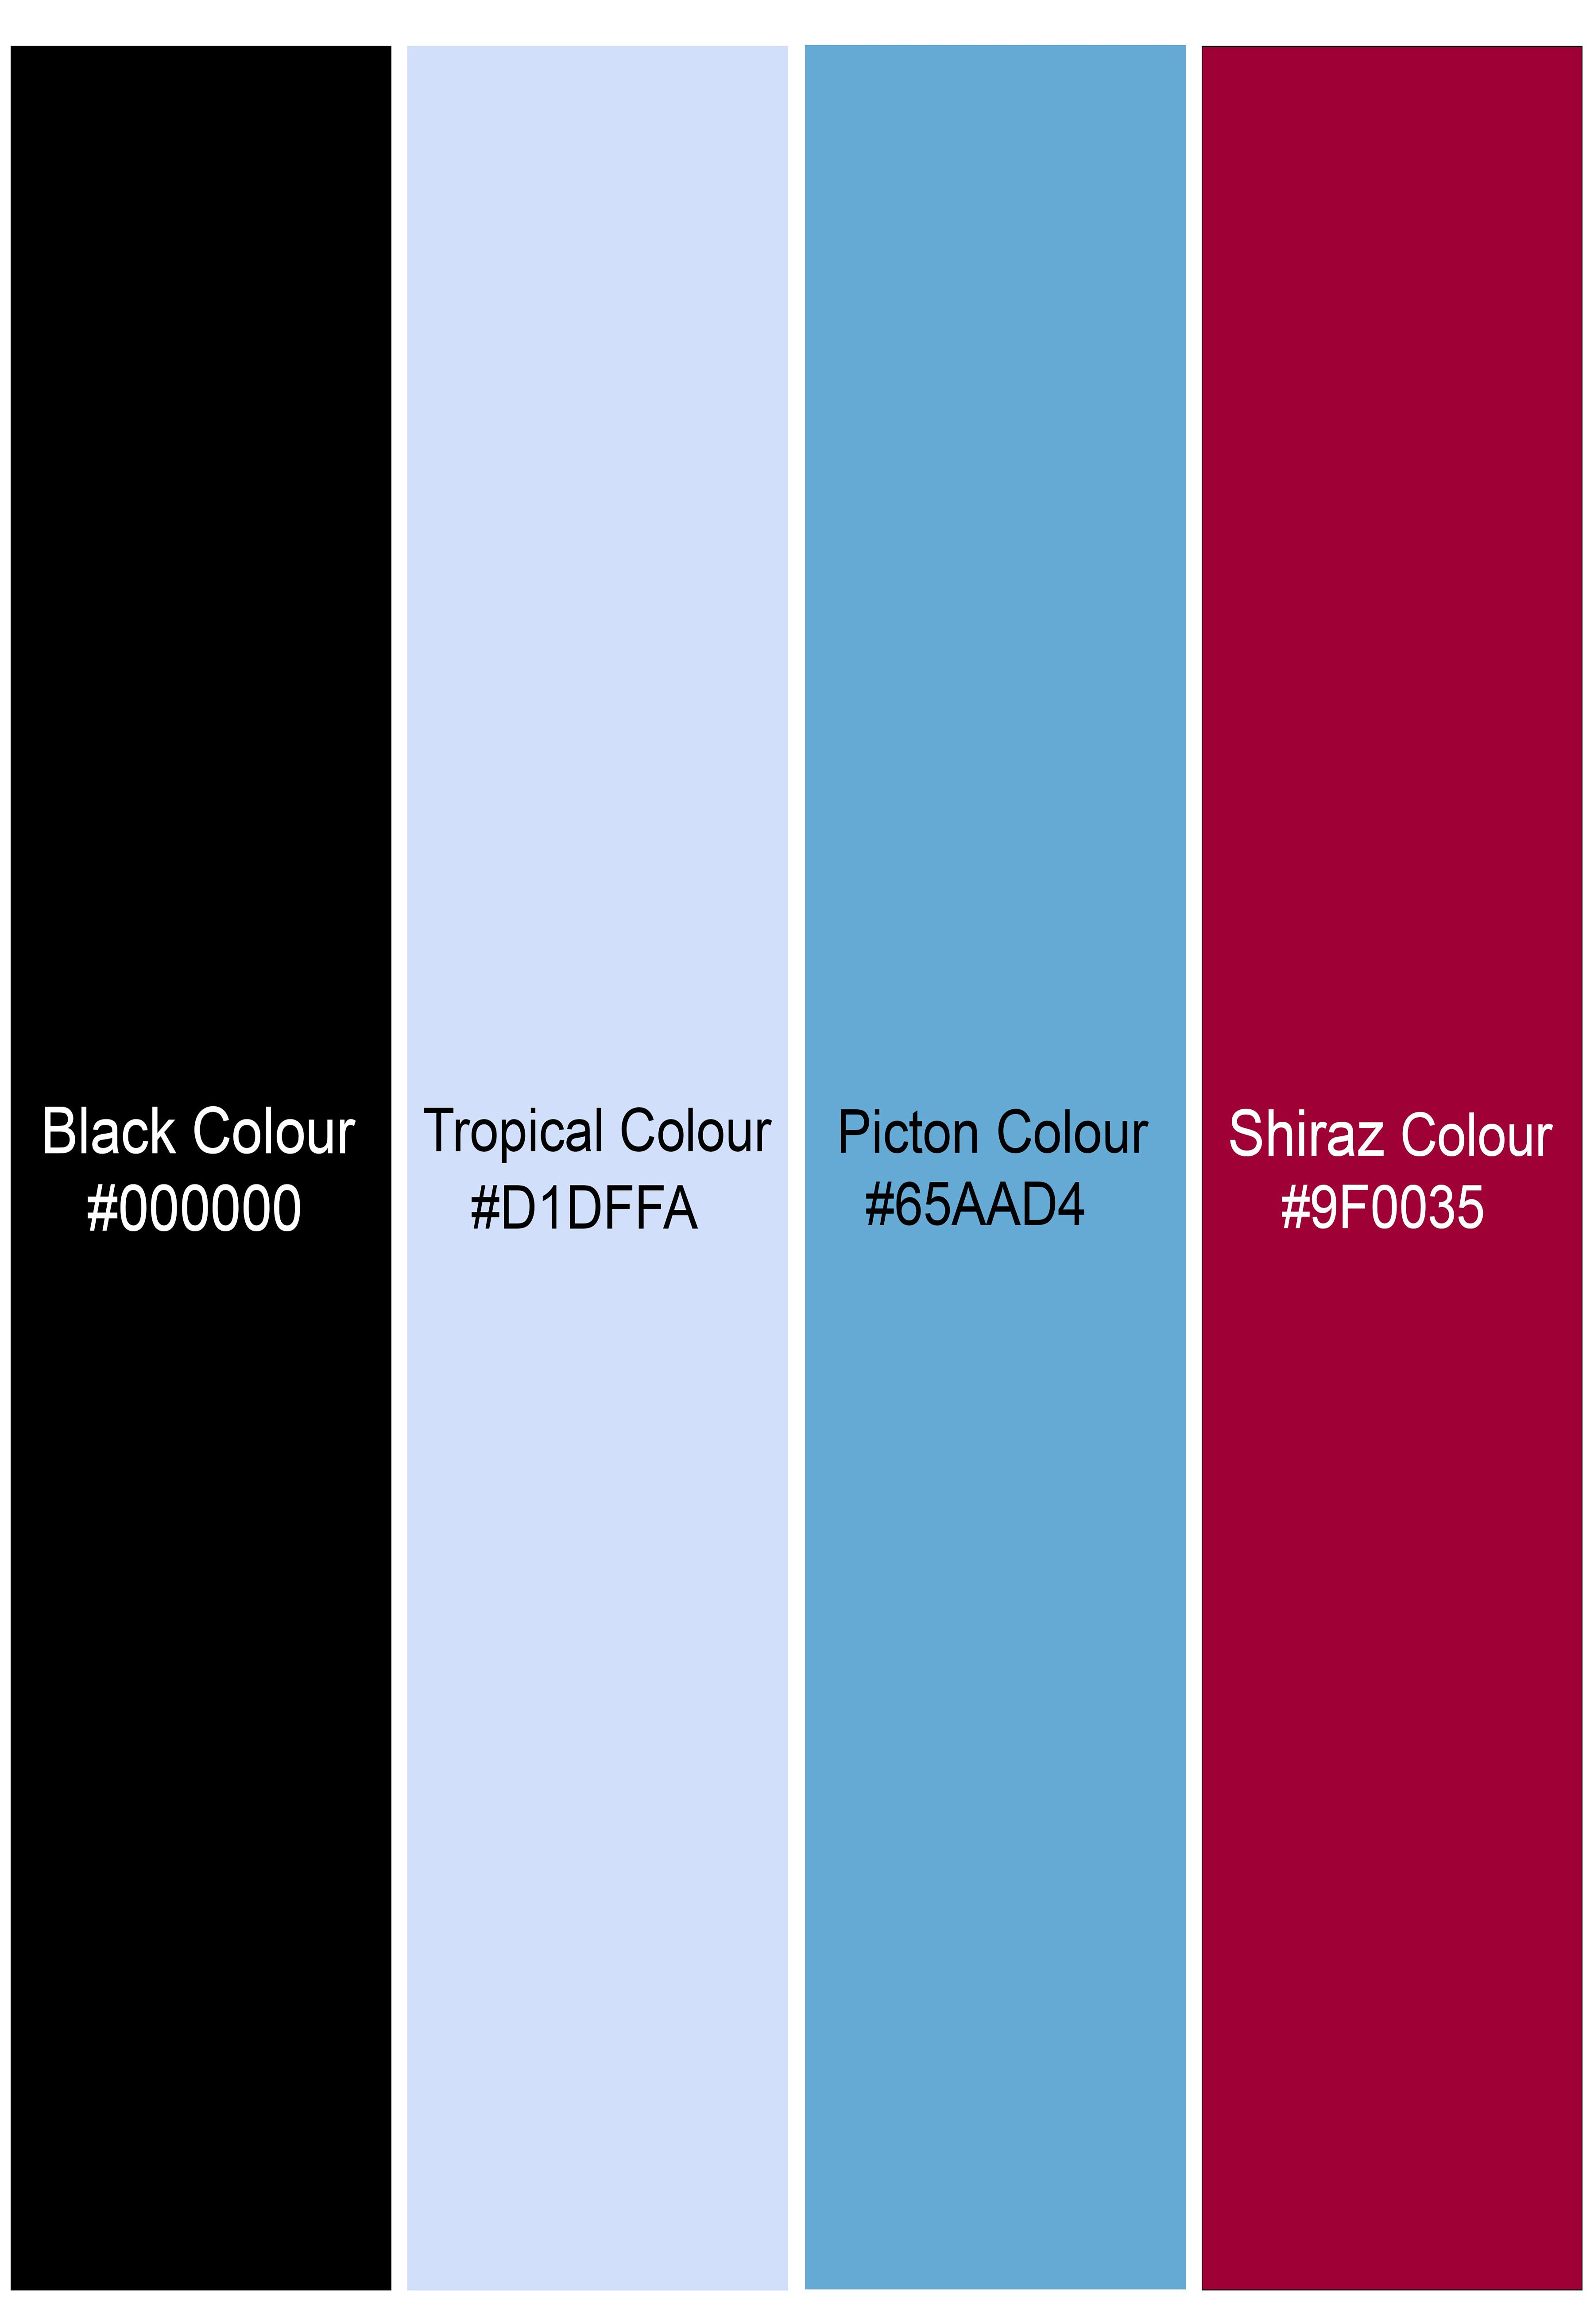 Jade Black with Picton Blue Multicolour Printed Premium Cotton Designer Suit ST2862-S-36,ST2862-S-38,ST2862-S-40,ST2862-S-42,ST2862-S-44,ST2862-S-46,ST2862-S-48,ST2862-S-50,ST2862-S-52,ST2862-S-54,ST2862-S-56,ST2862-S-58,ST2862-S-60